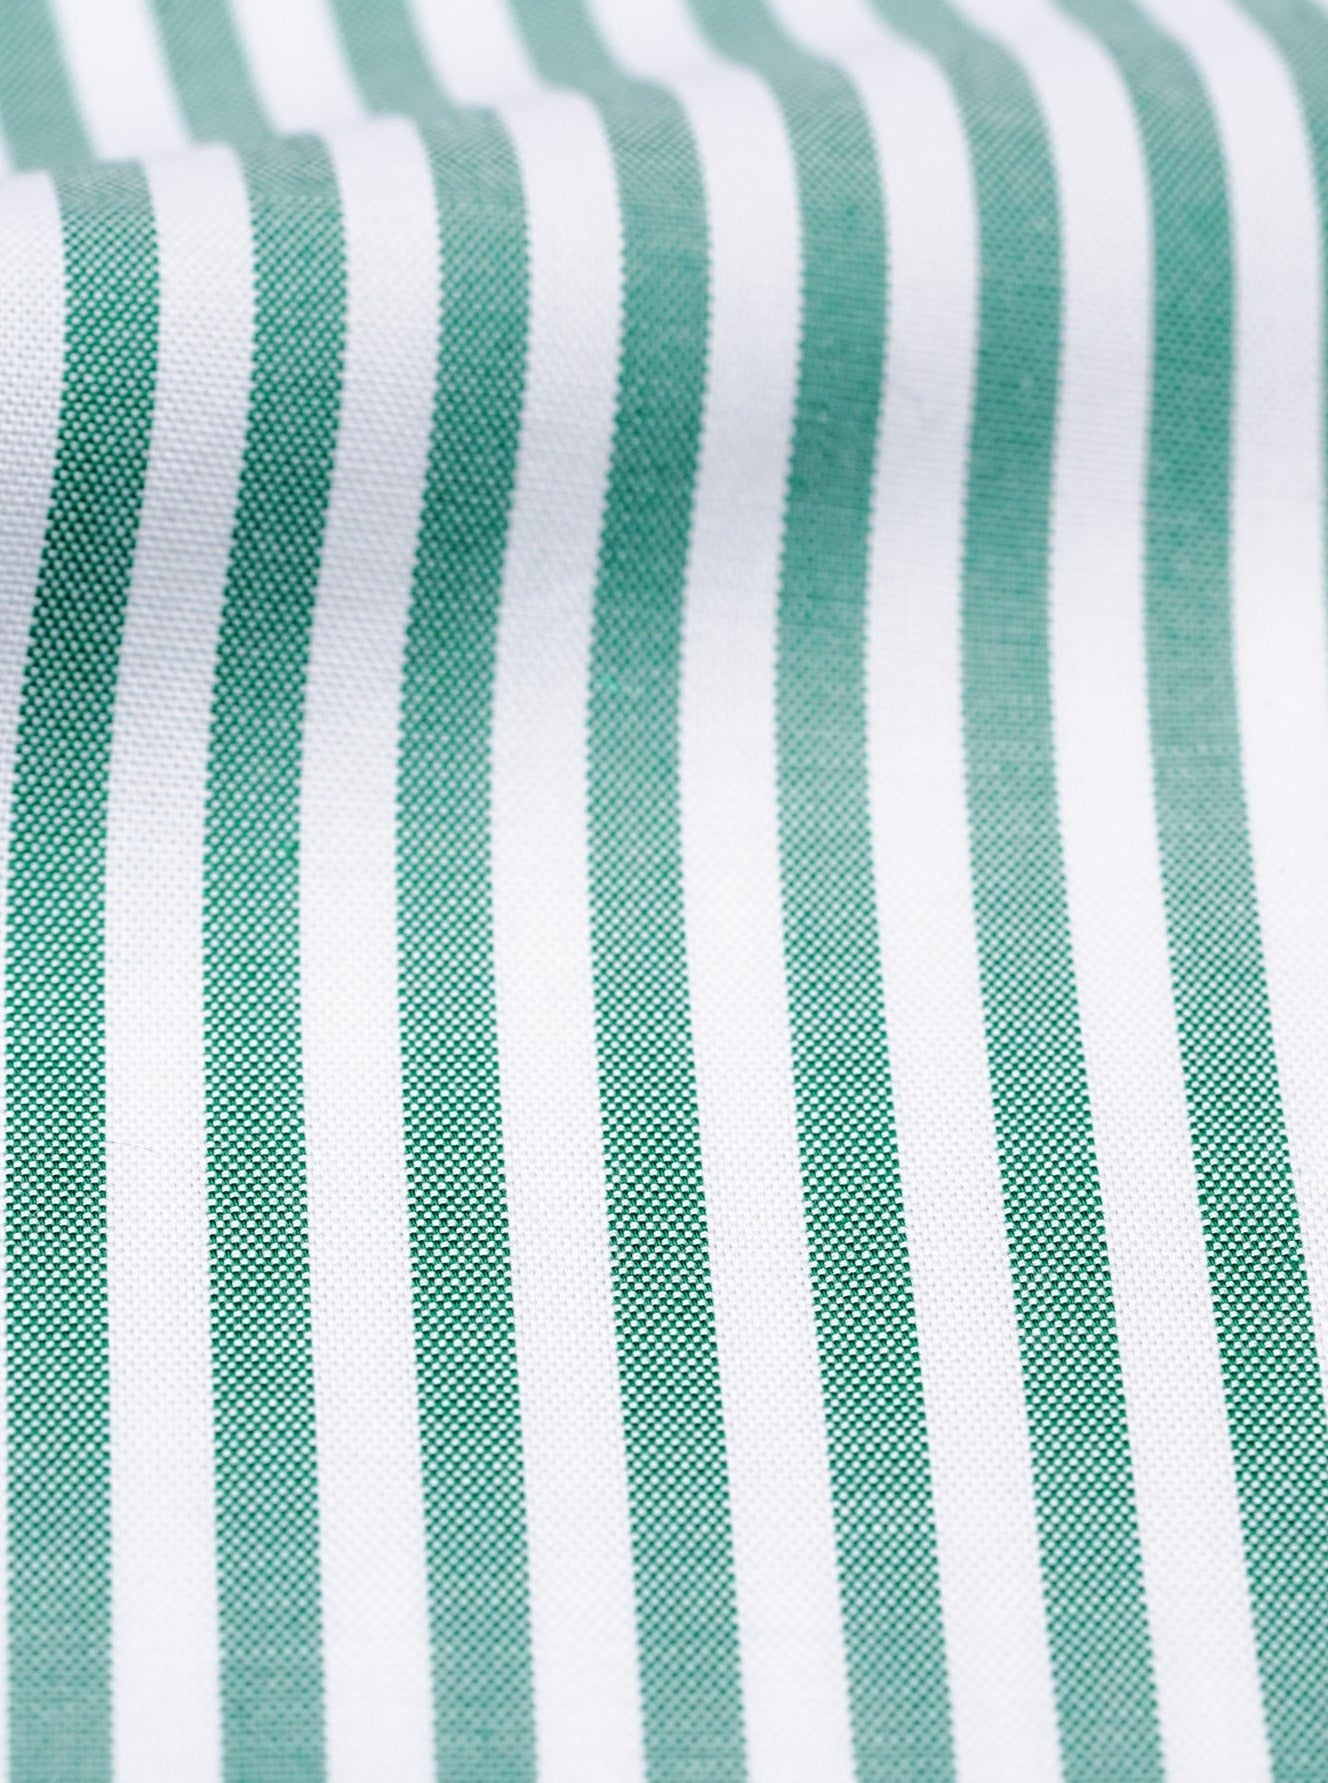 Sleep mask - gratitude green stripe